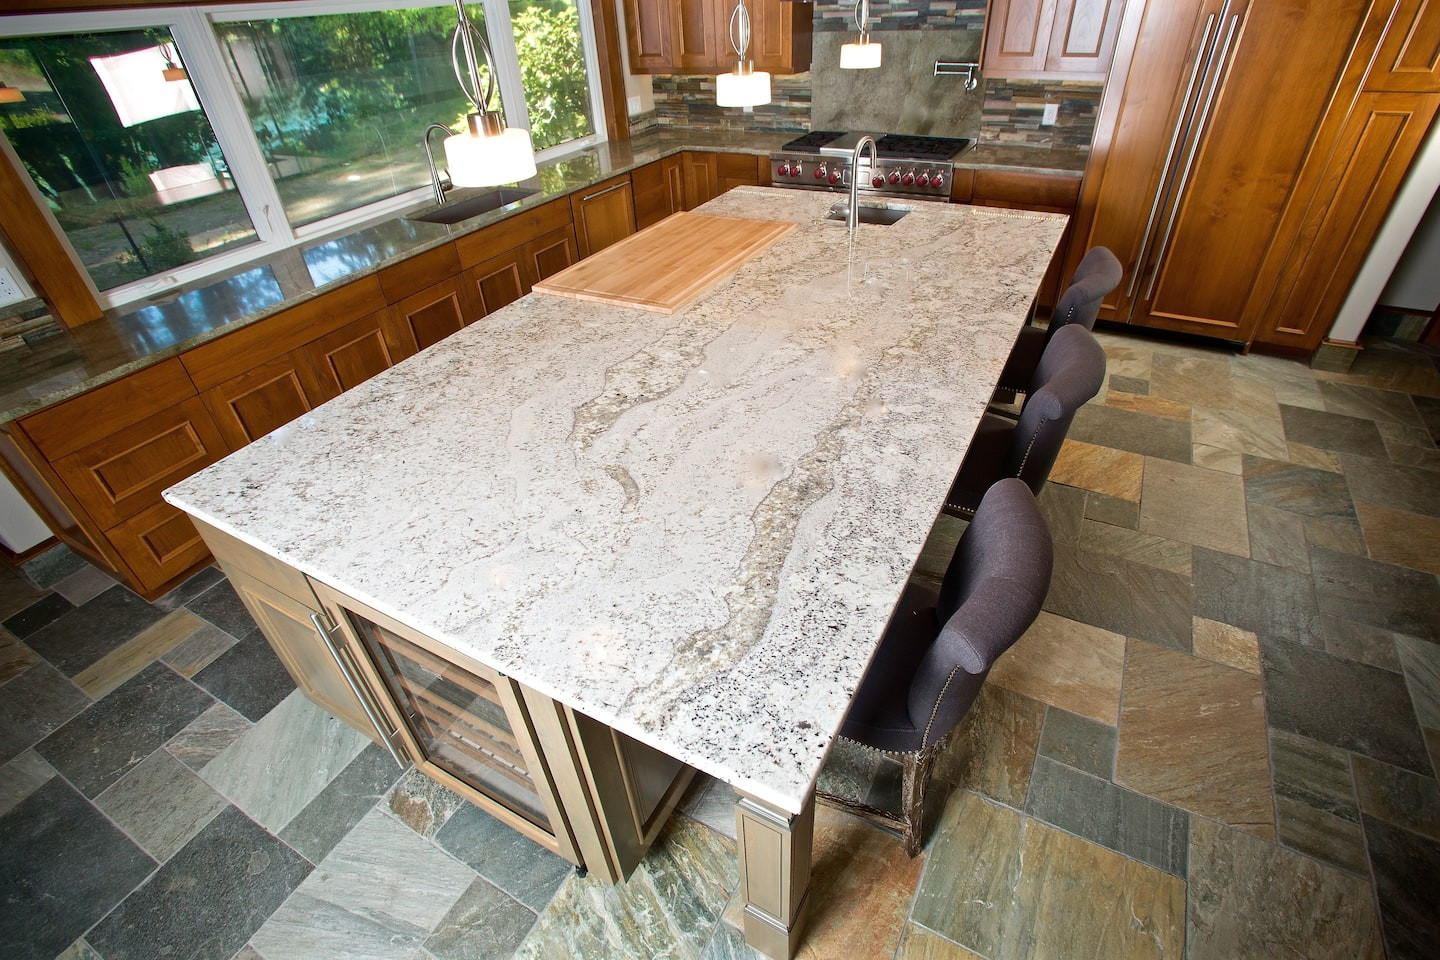 Kitchen Island With Granite Countertop
 Granite Kitchen Countertop Designs and Styles